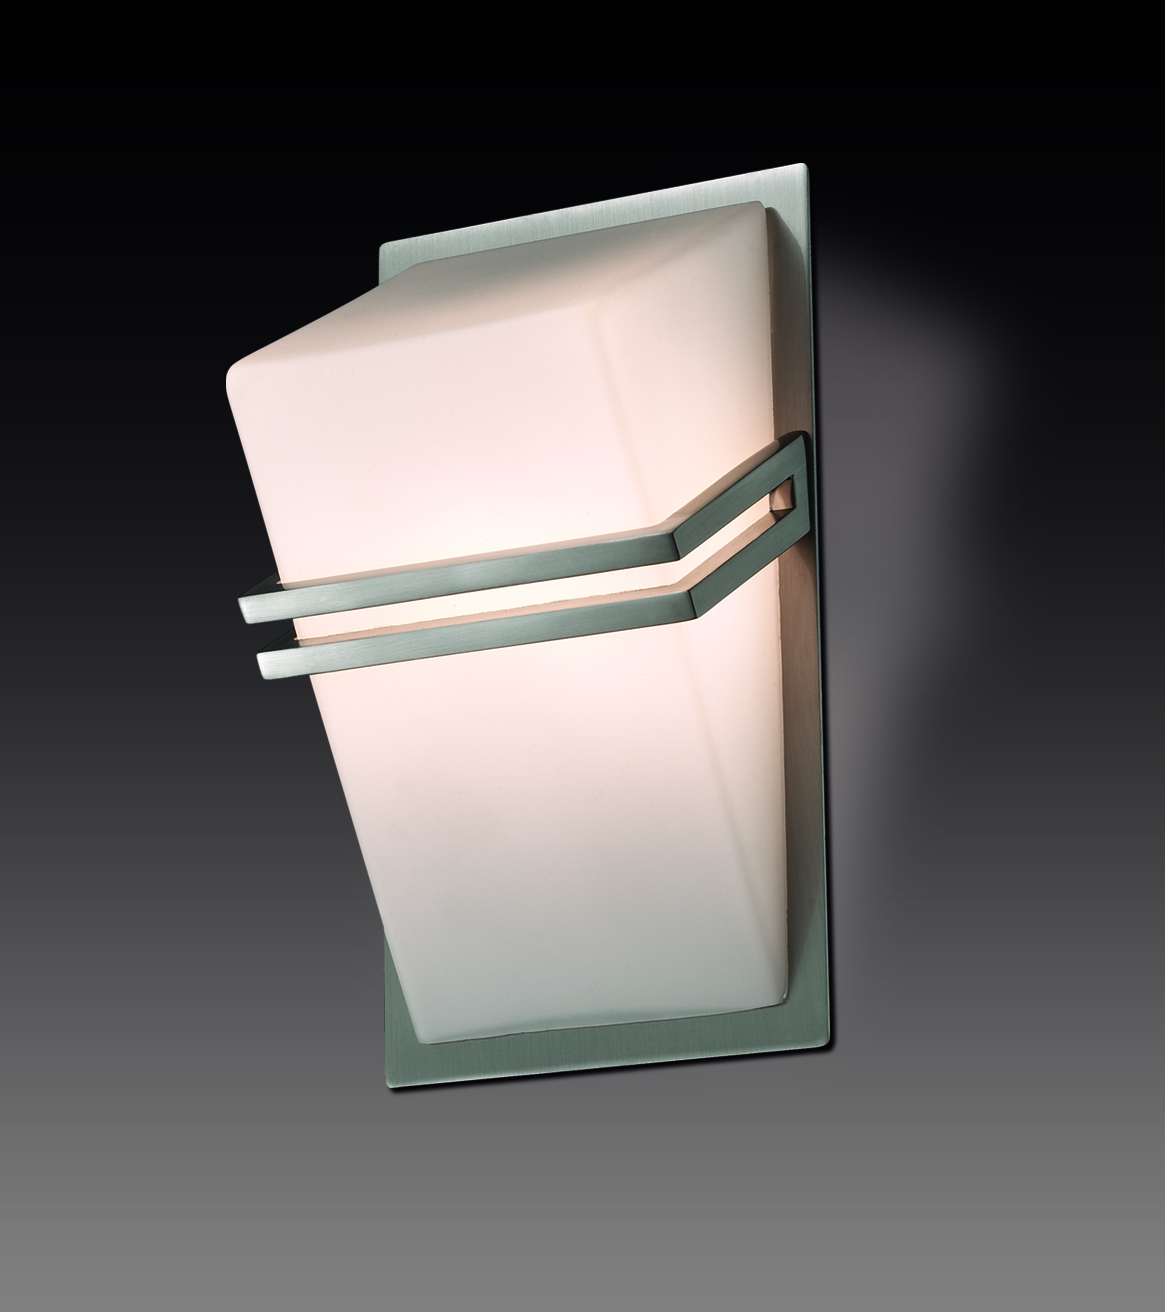 Настенный светильник Odeon Light Walli Tiara 2025/1W, 1xG9x40W, никель, белый, металл, стекло - фото 1